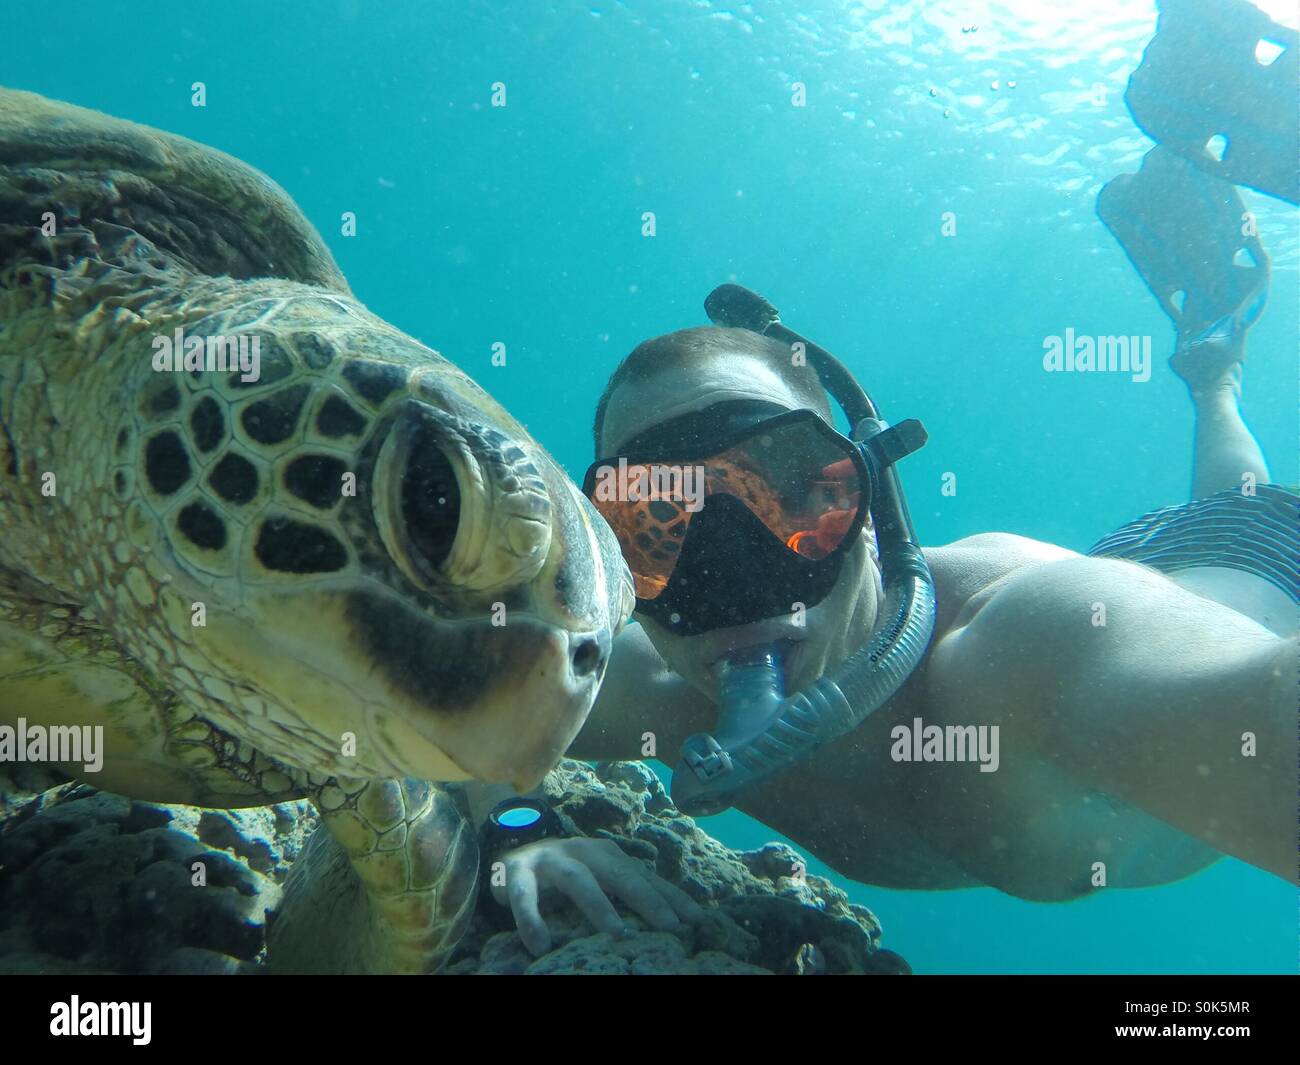 Snorkeling in Hawaii with a Hawaiian Sea Turtle. Stock Photo